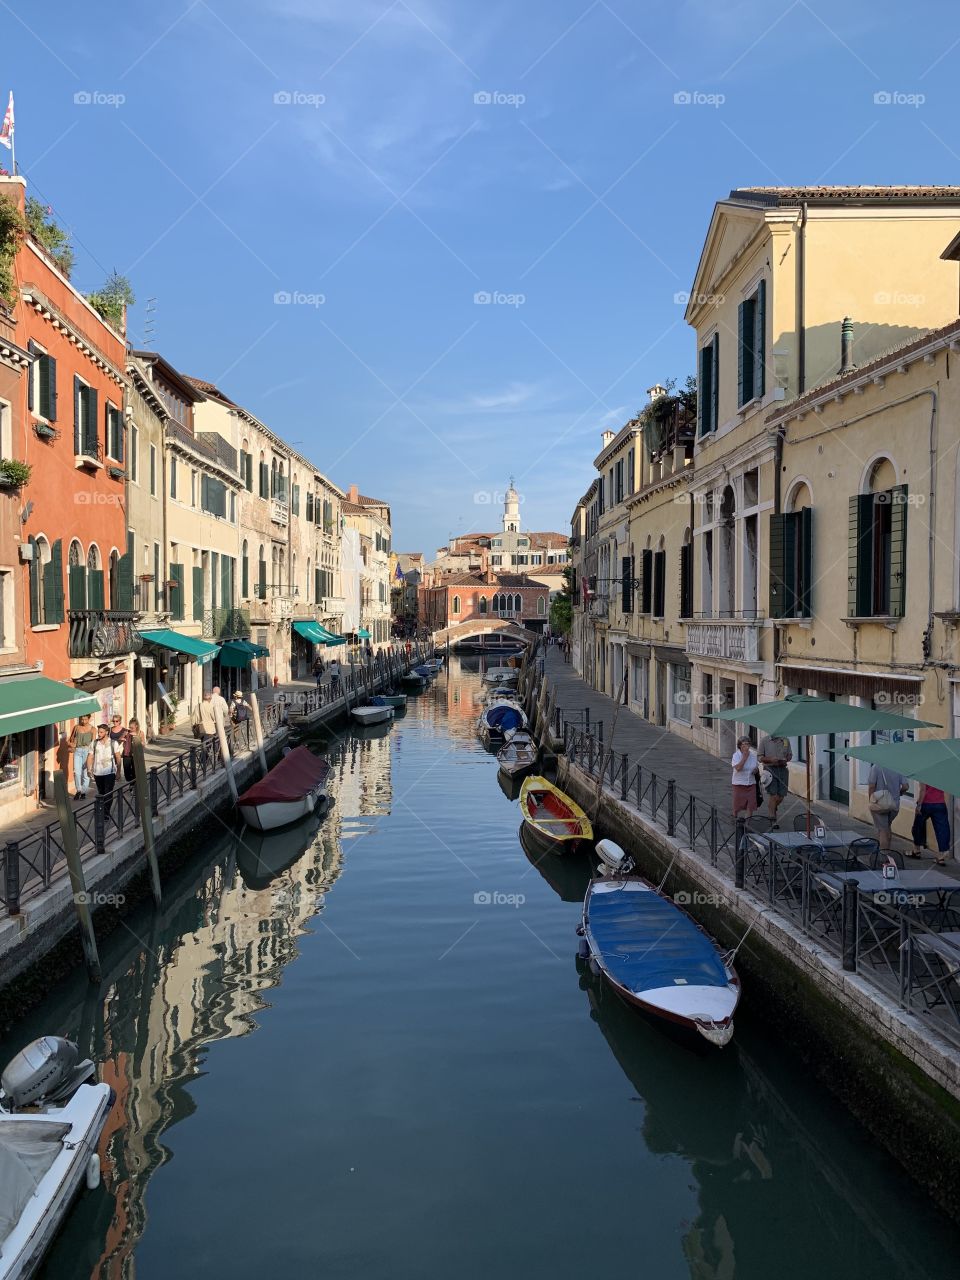 Venice Roads